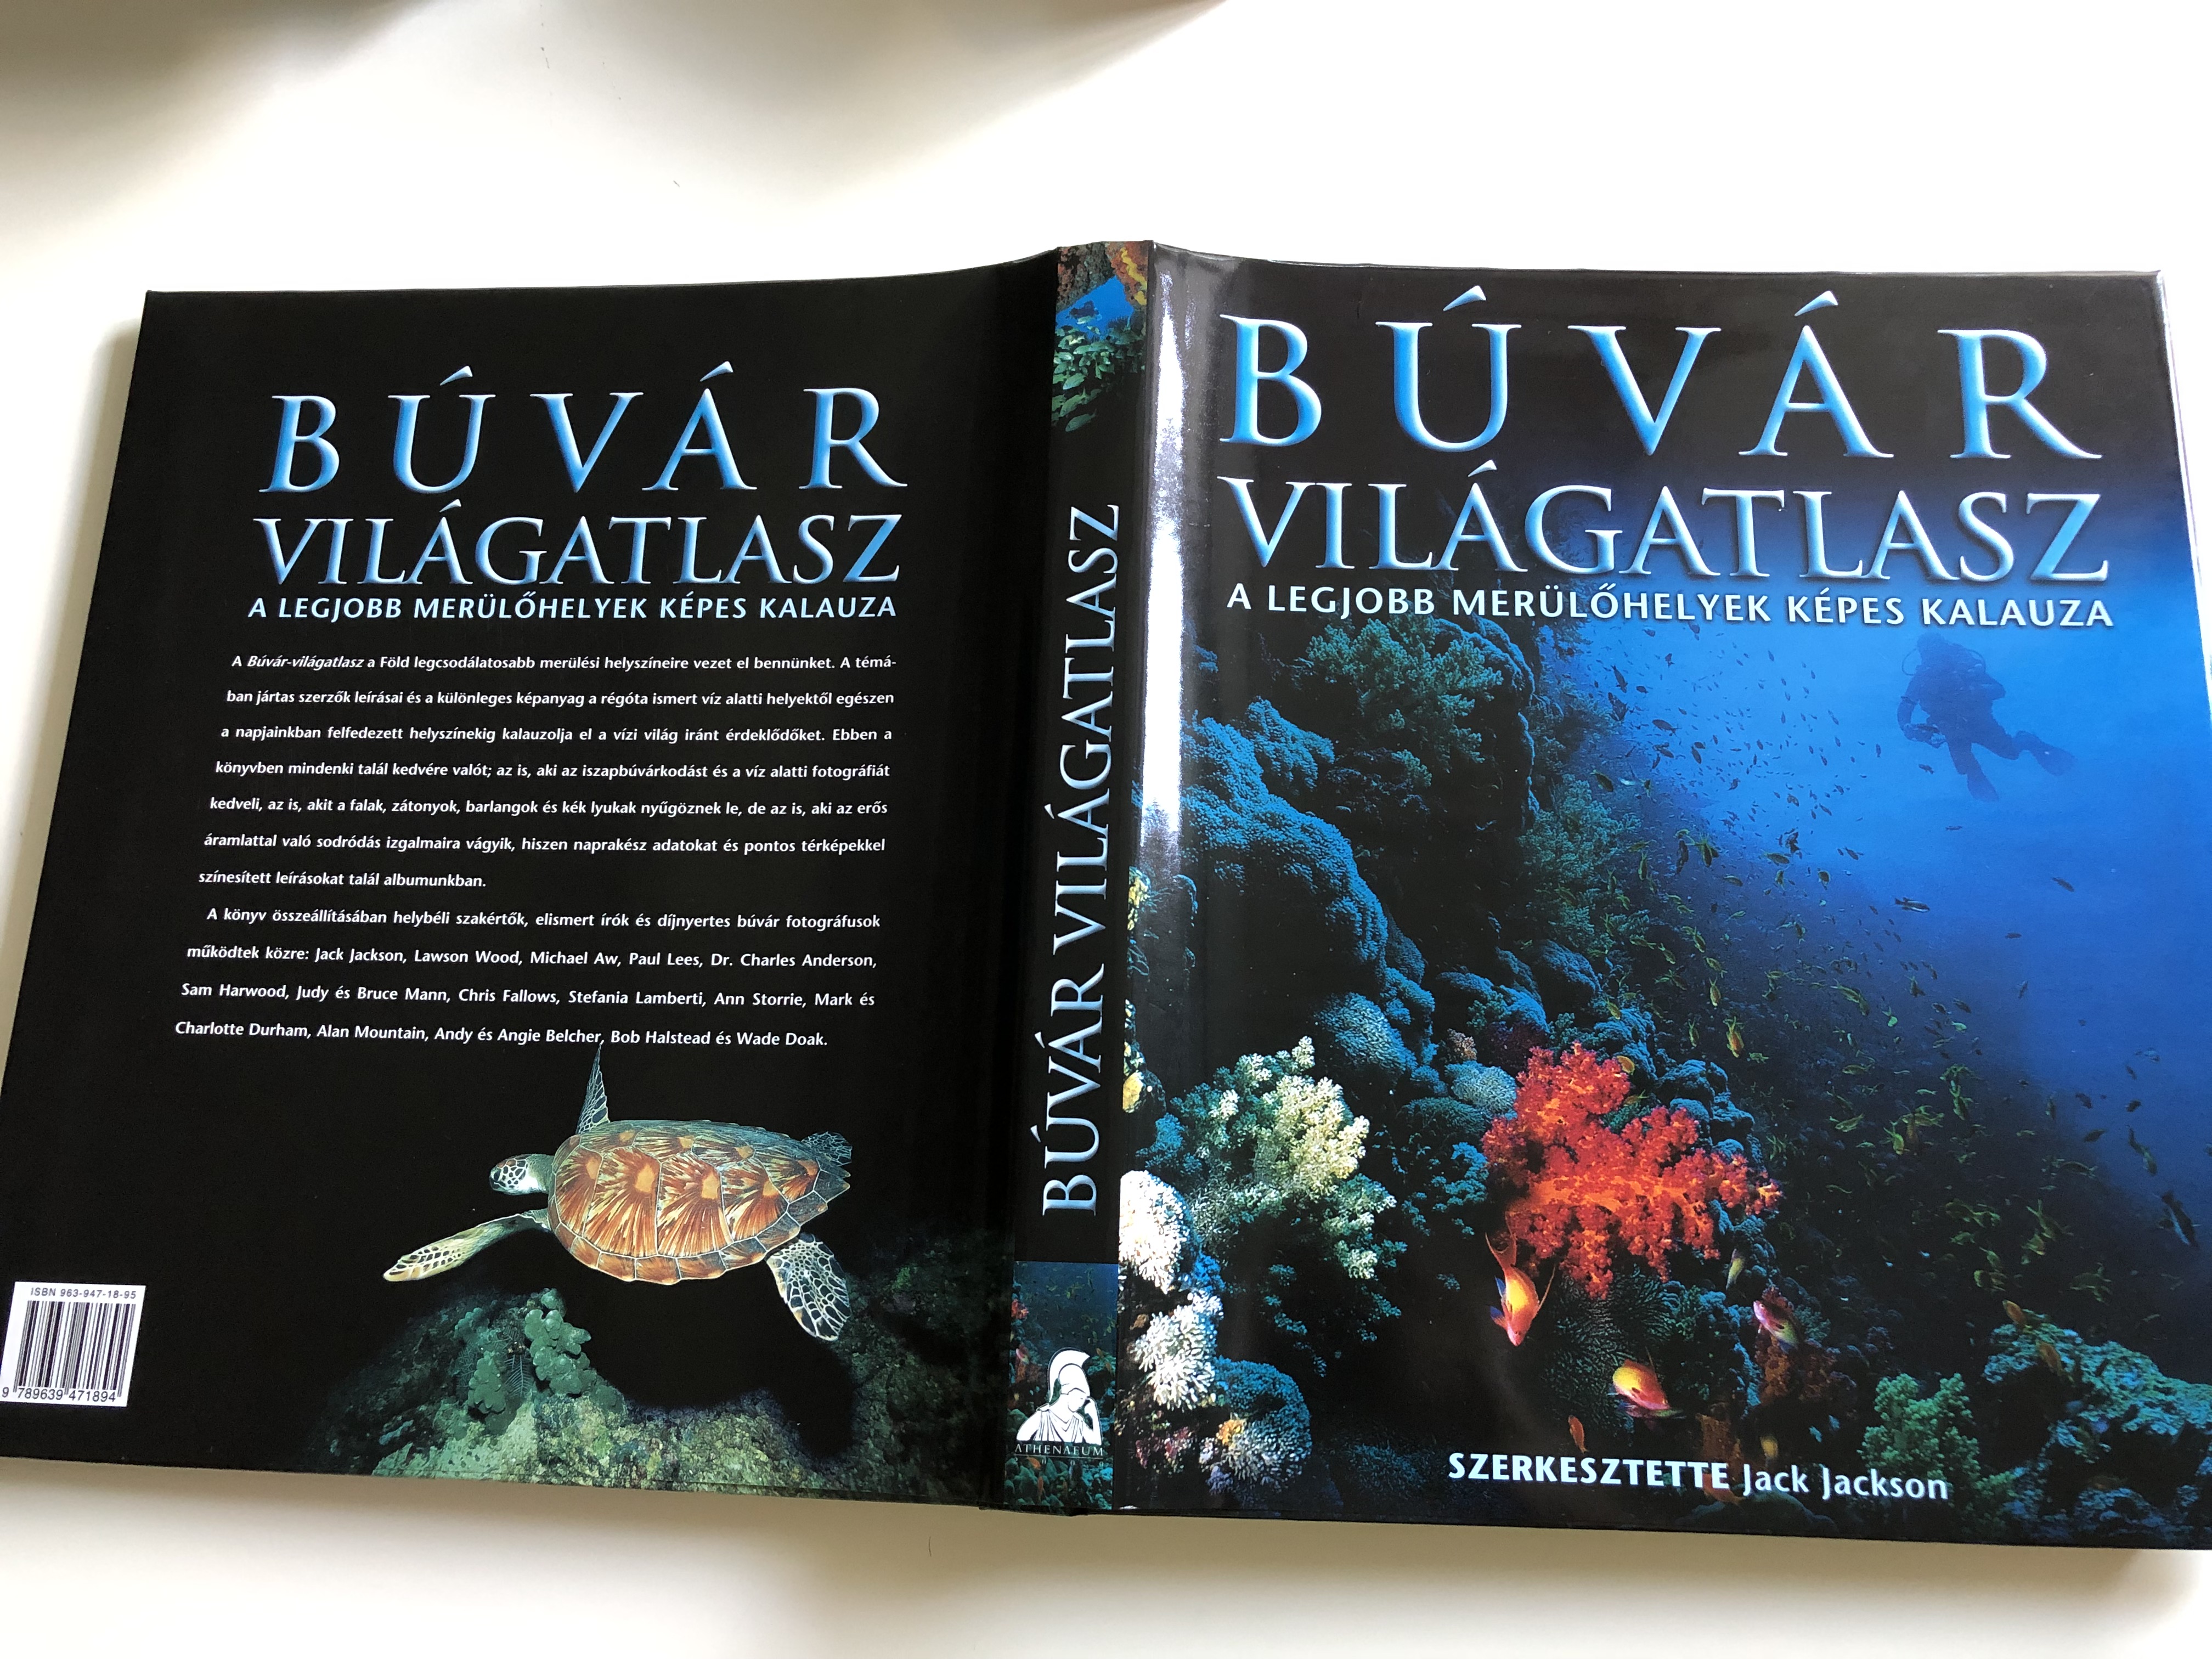 b-v-r-vil-gatlasz-a-legjobb-mer-l-helyek-k-pes-kalauza-hungarian-edition-of-dive-atlas-of-the-world-editor-jack-jackson-illustrations-steven-felmore-atenaeum-2003-22-.jpg